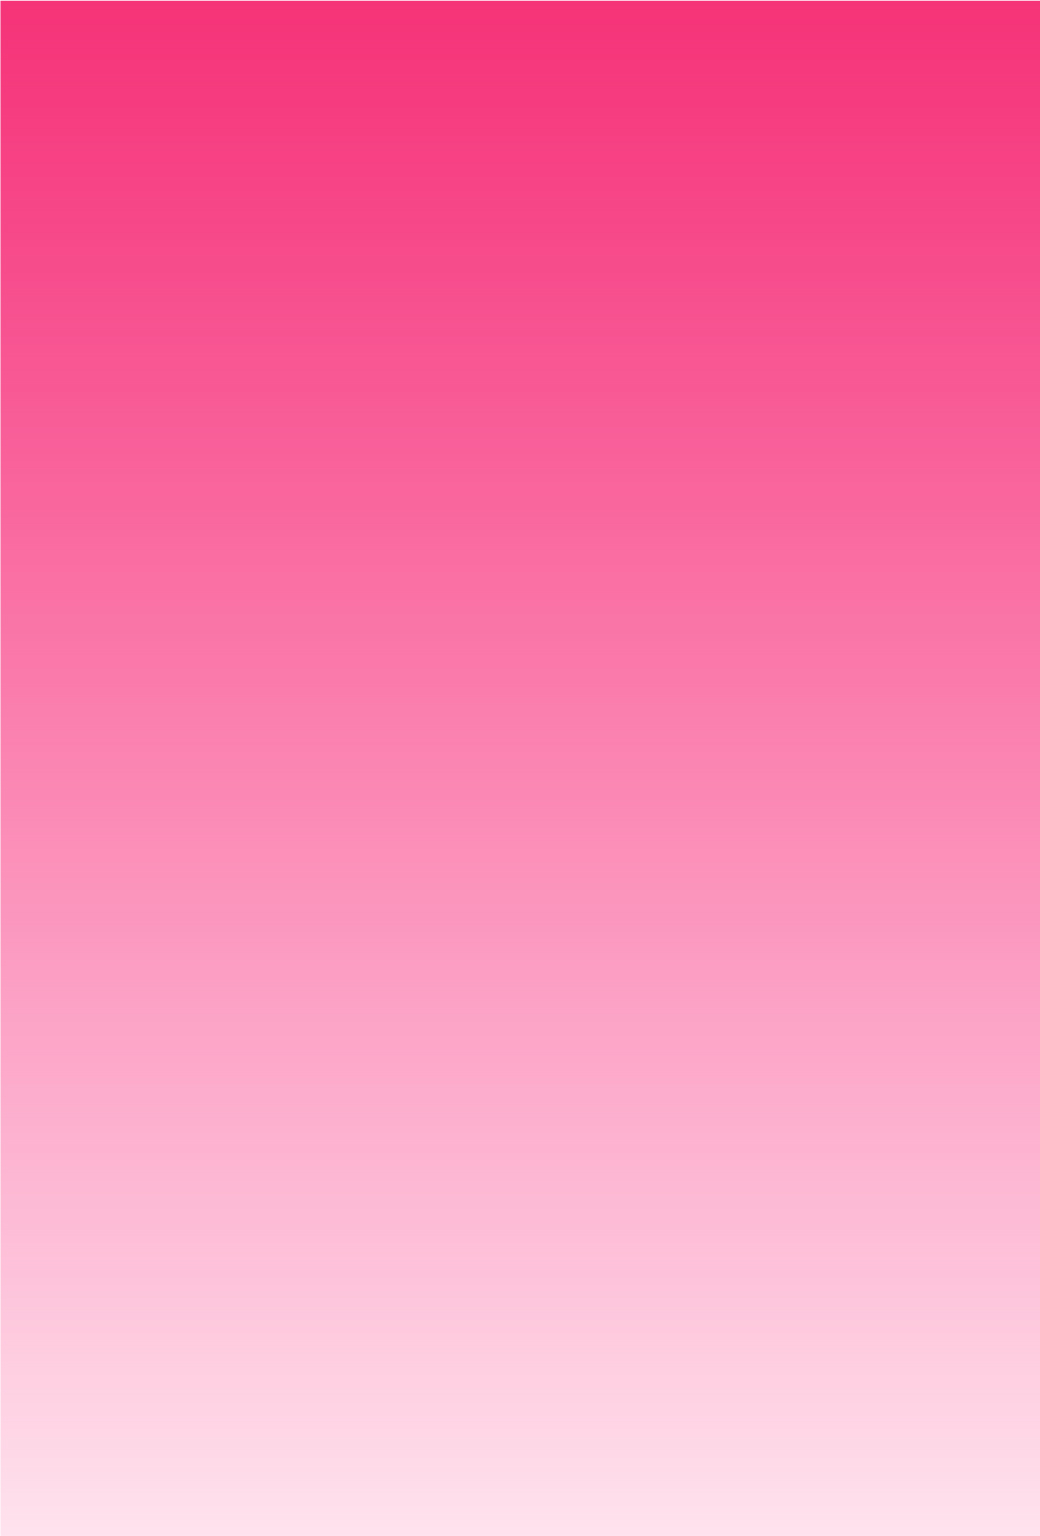 Pink Fade iPhone Ringtones